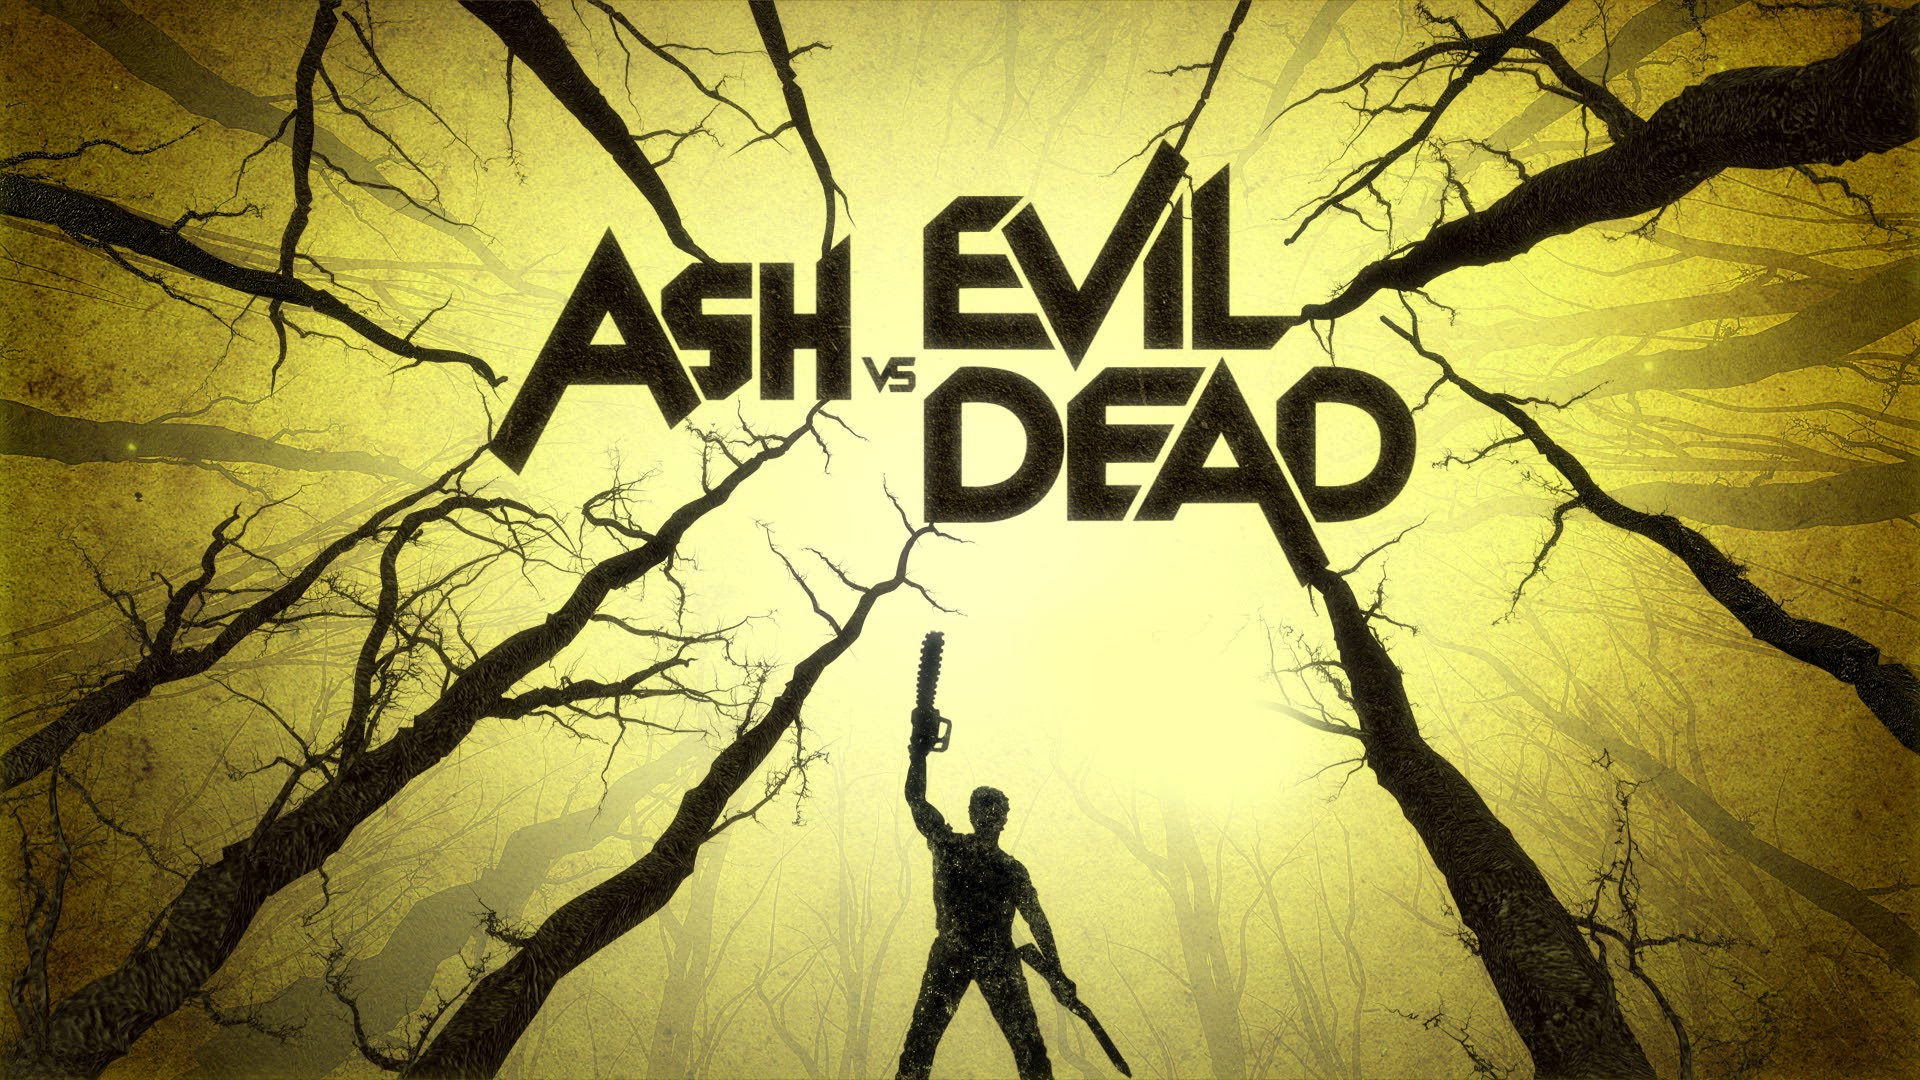 Ash VS. Evil Dead